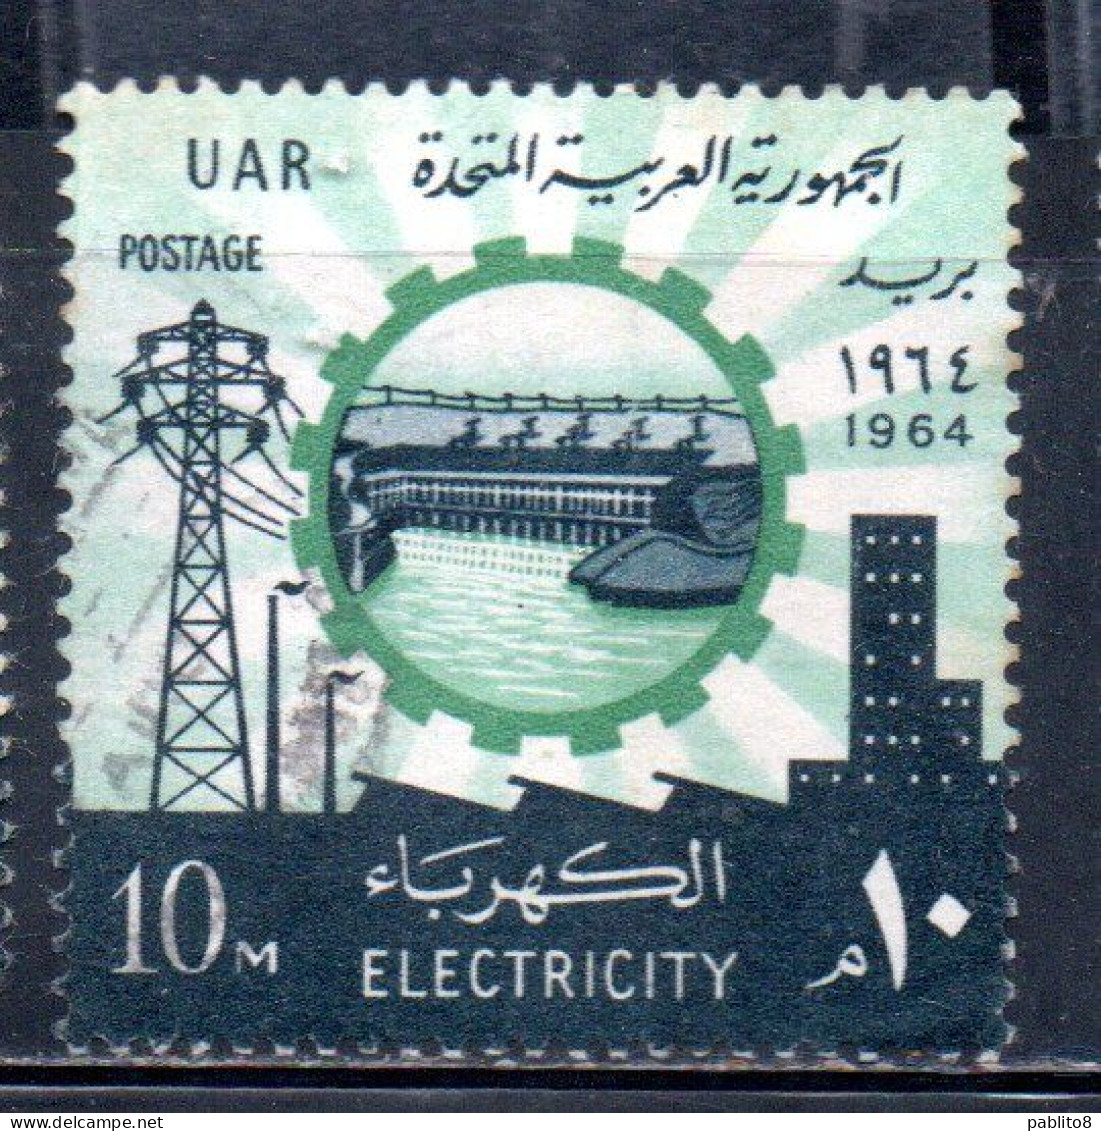 UAR EGYPT EGITTO 1964 ELECTRICITY ASWAN HIGH DAM HYDROELICTRIC POWER STATION LAND RECLAMATION 10m USED USATO - Usati